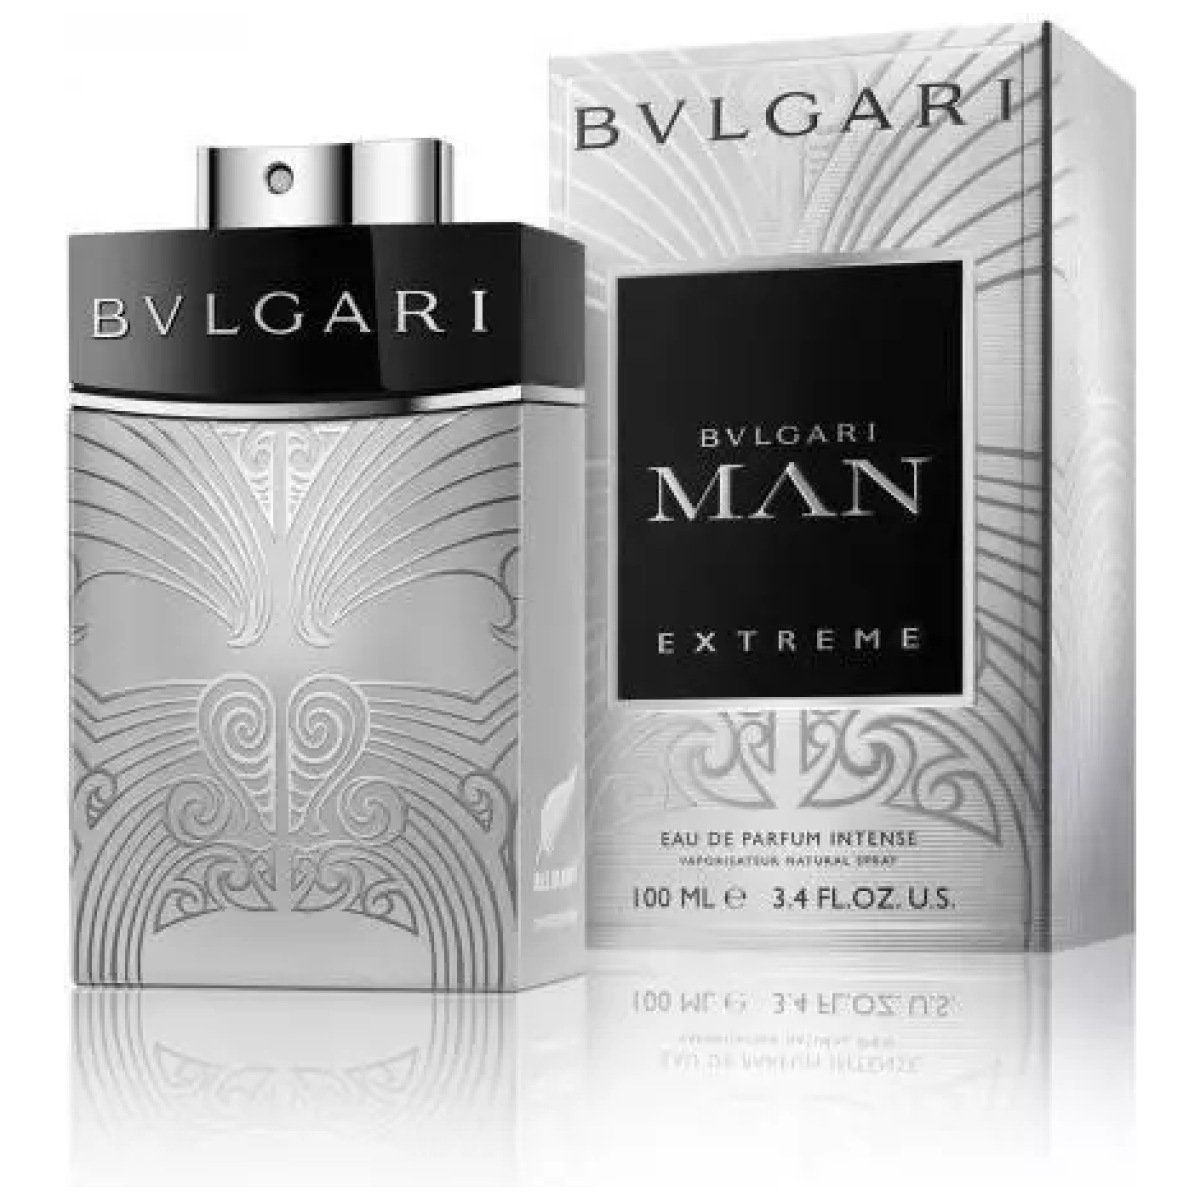 Bvlgari Men Extreme EDP Intense Perfume For Men 100ml